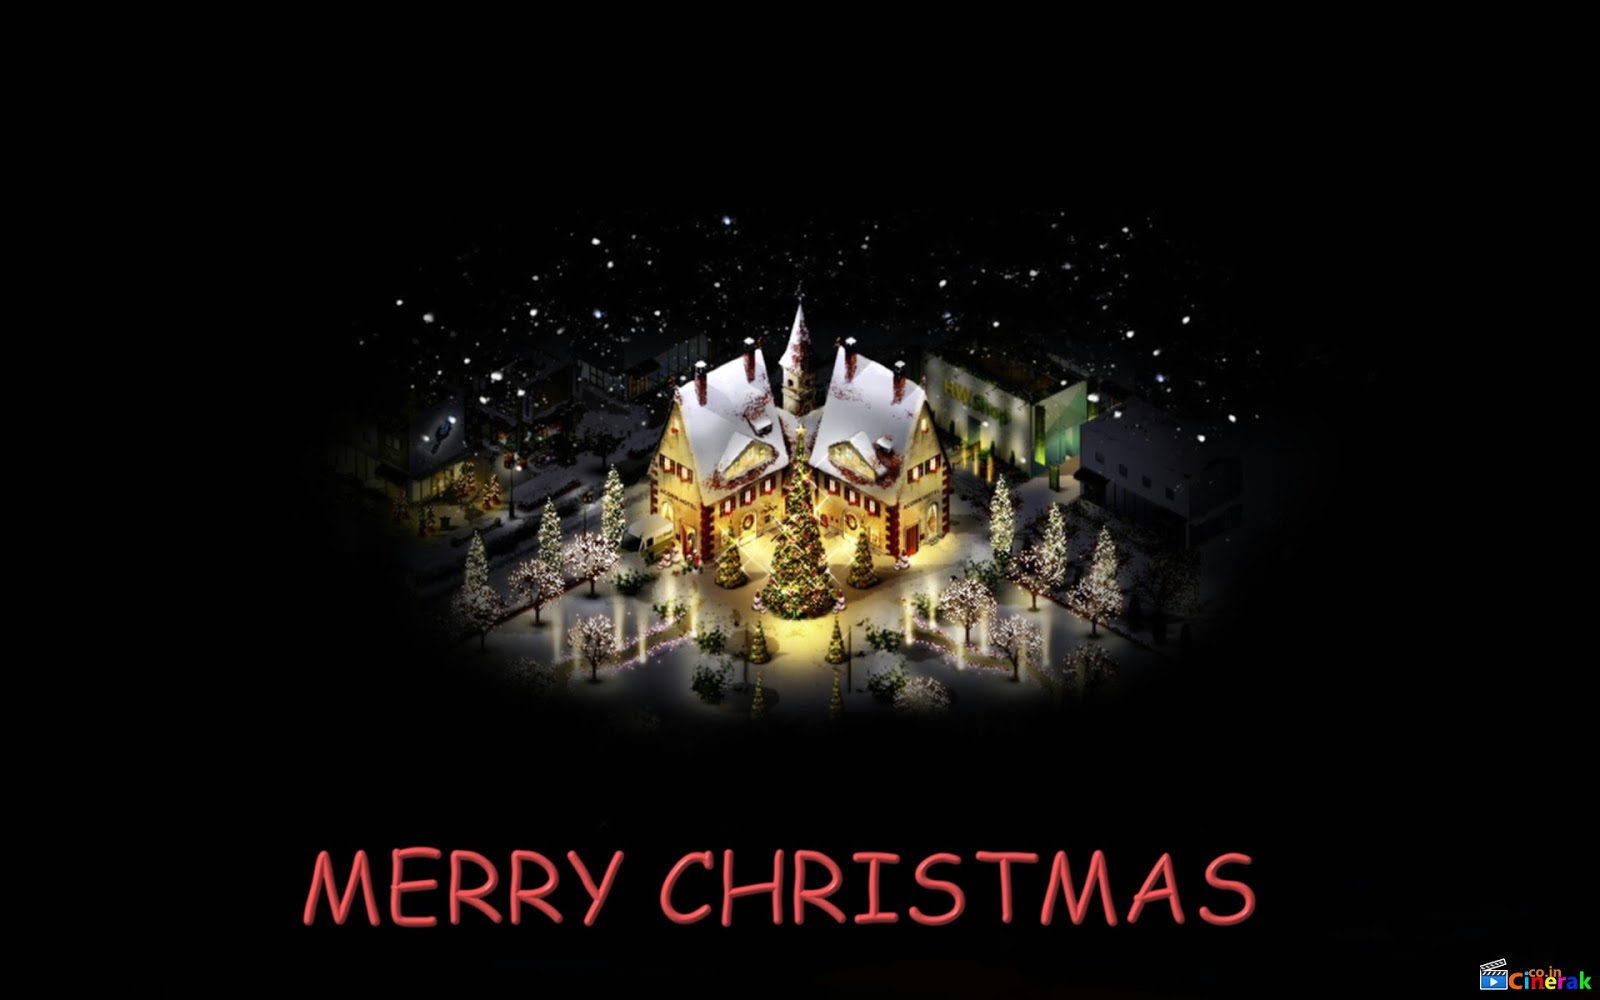 https://blogger.googleusercontent.com/img/b/R29vZ2xl/AVvXsEh5J_nIEOZvilXNTqSqhcVeLjoc8p7FLis2UNn-CgHwnMnB3Nlg6R2T0XKFtD4tA50YUEKngqwHwamIu44KkSjyYnEFKm3xBfN6evP4IXX69MIhBoh3UJPo8oHn3p4zSmDQjfB1EcPoxaE/s1600/Merry-Christmas-Hd-Desktop-2012-Wallpapers+(16).jpg